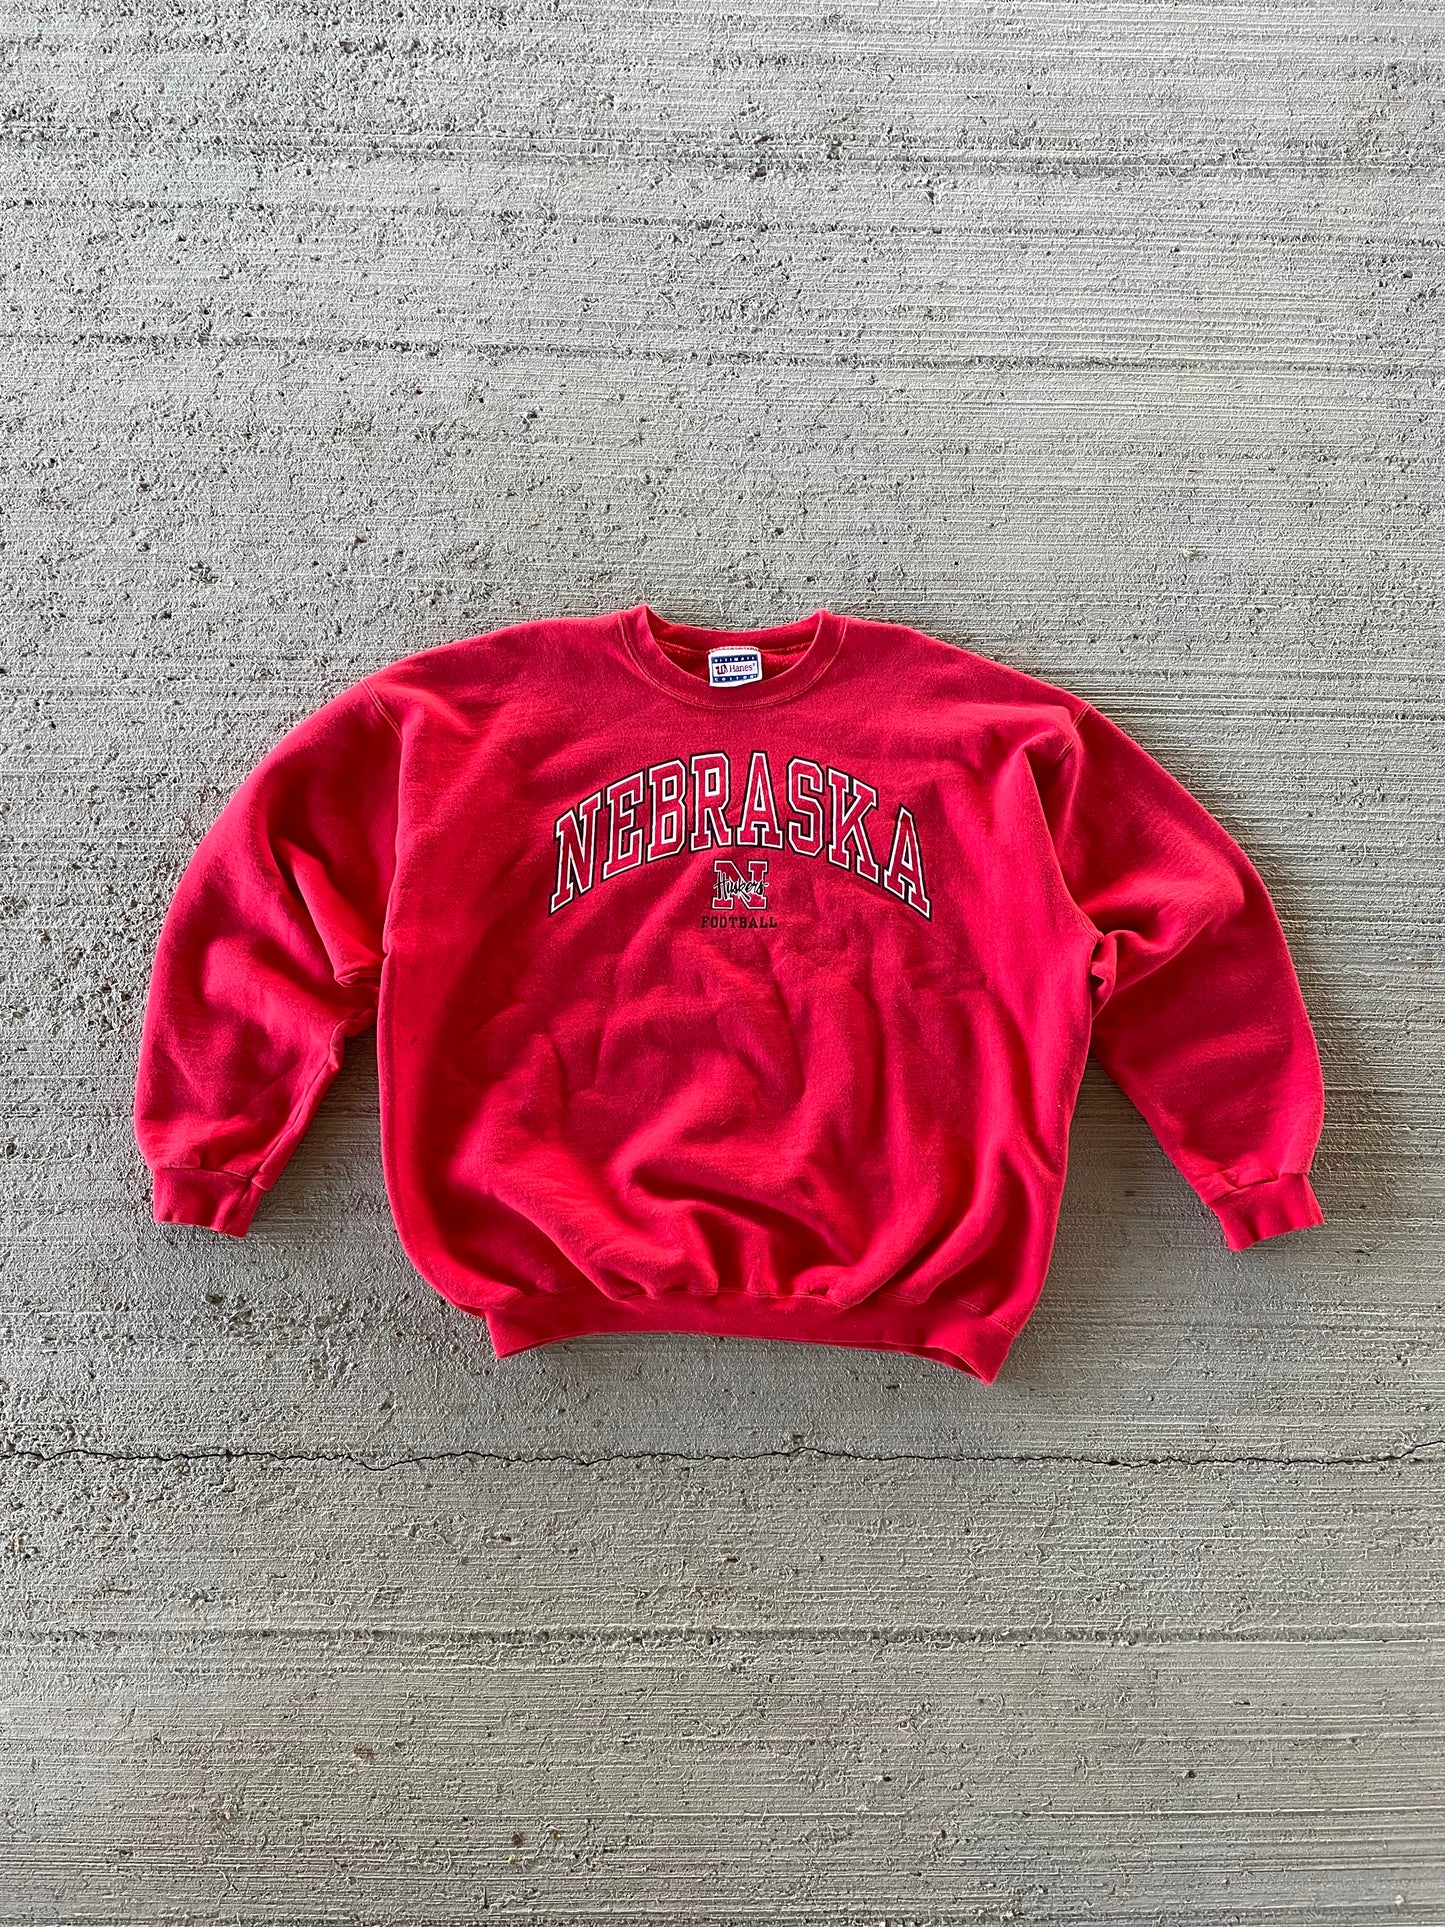 90s Nebraska Sweatshirt